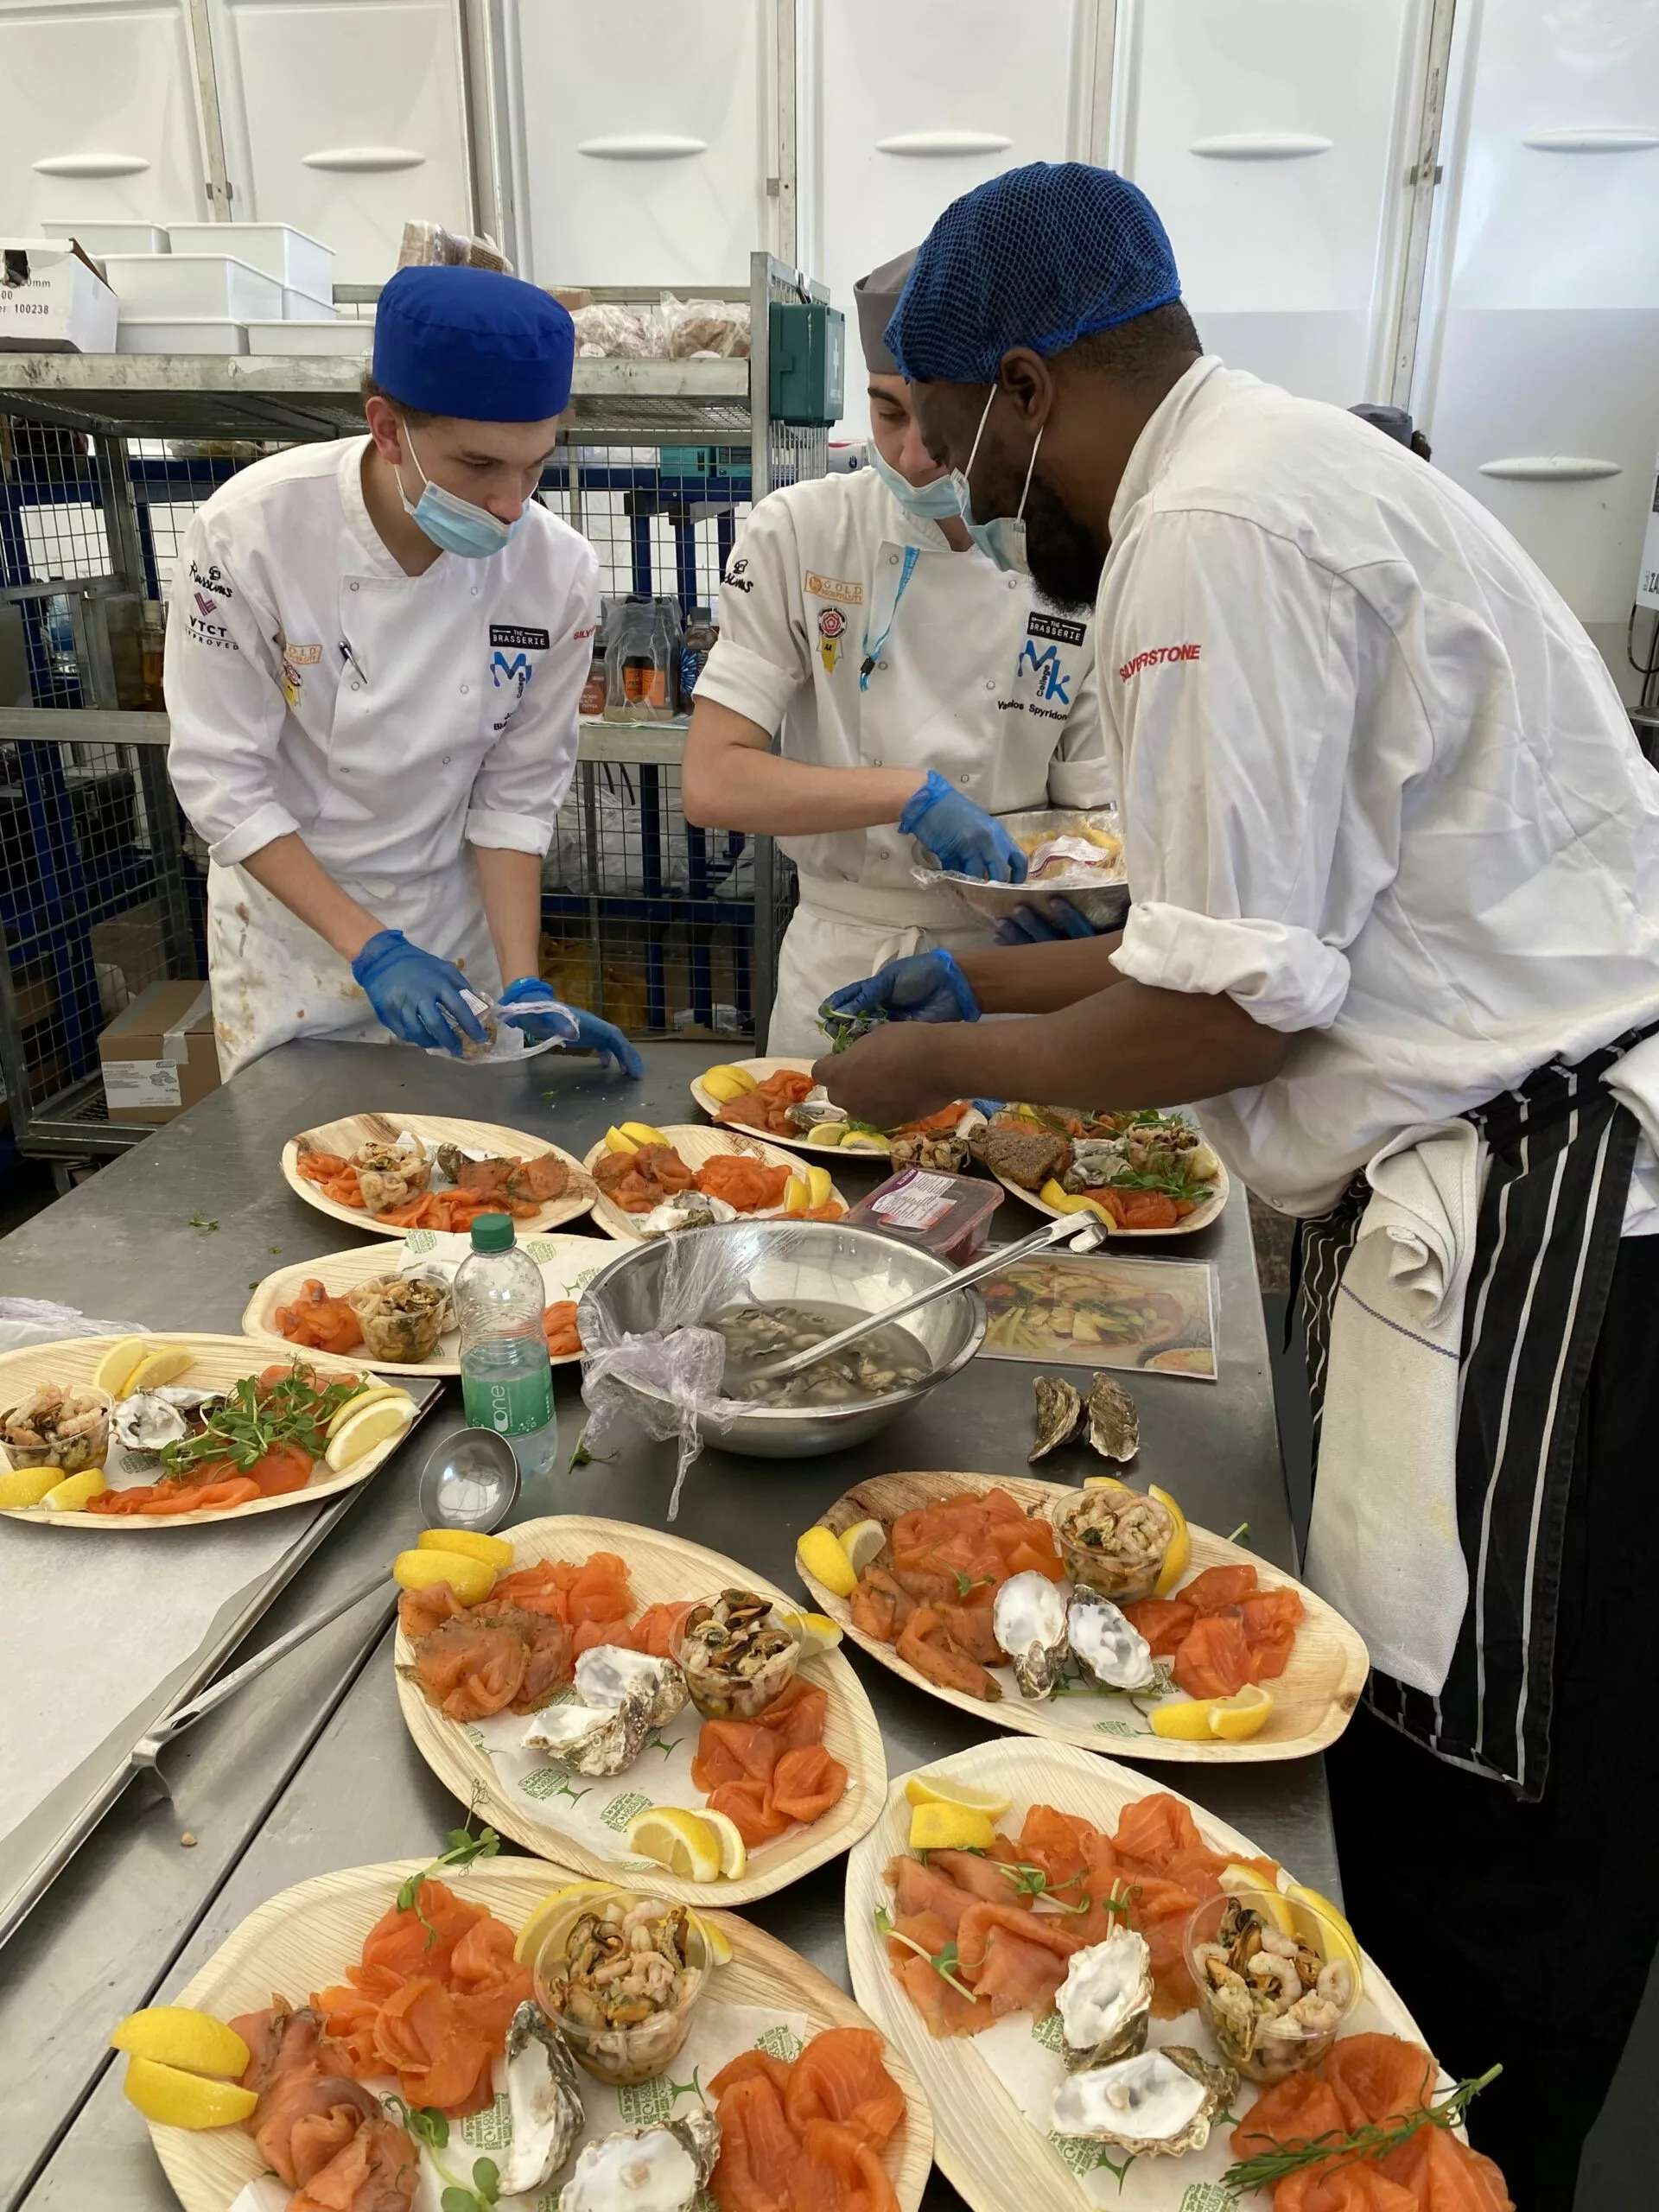 MK College Catering students shine at the British Grand Prix